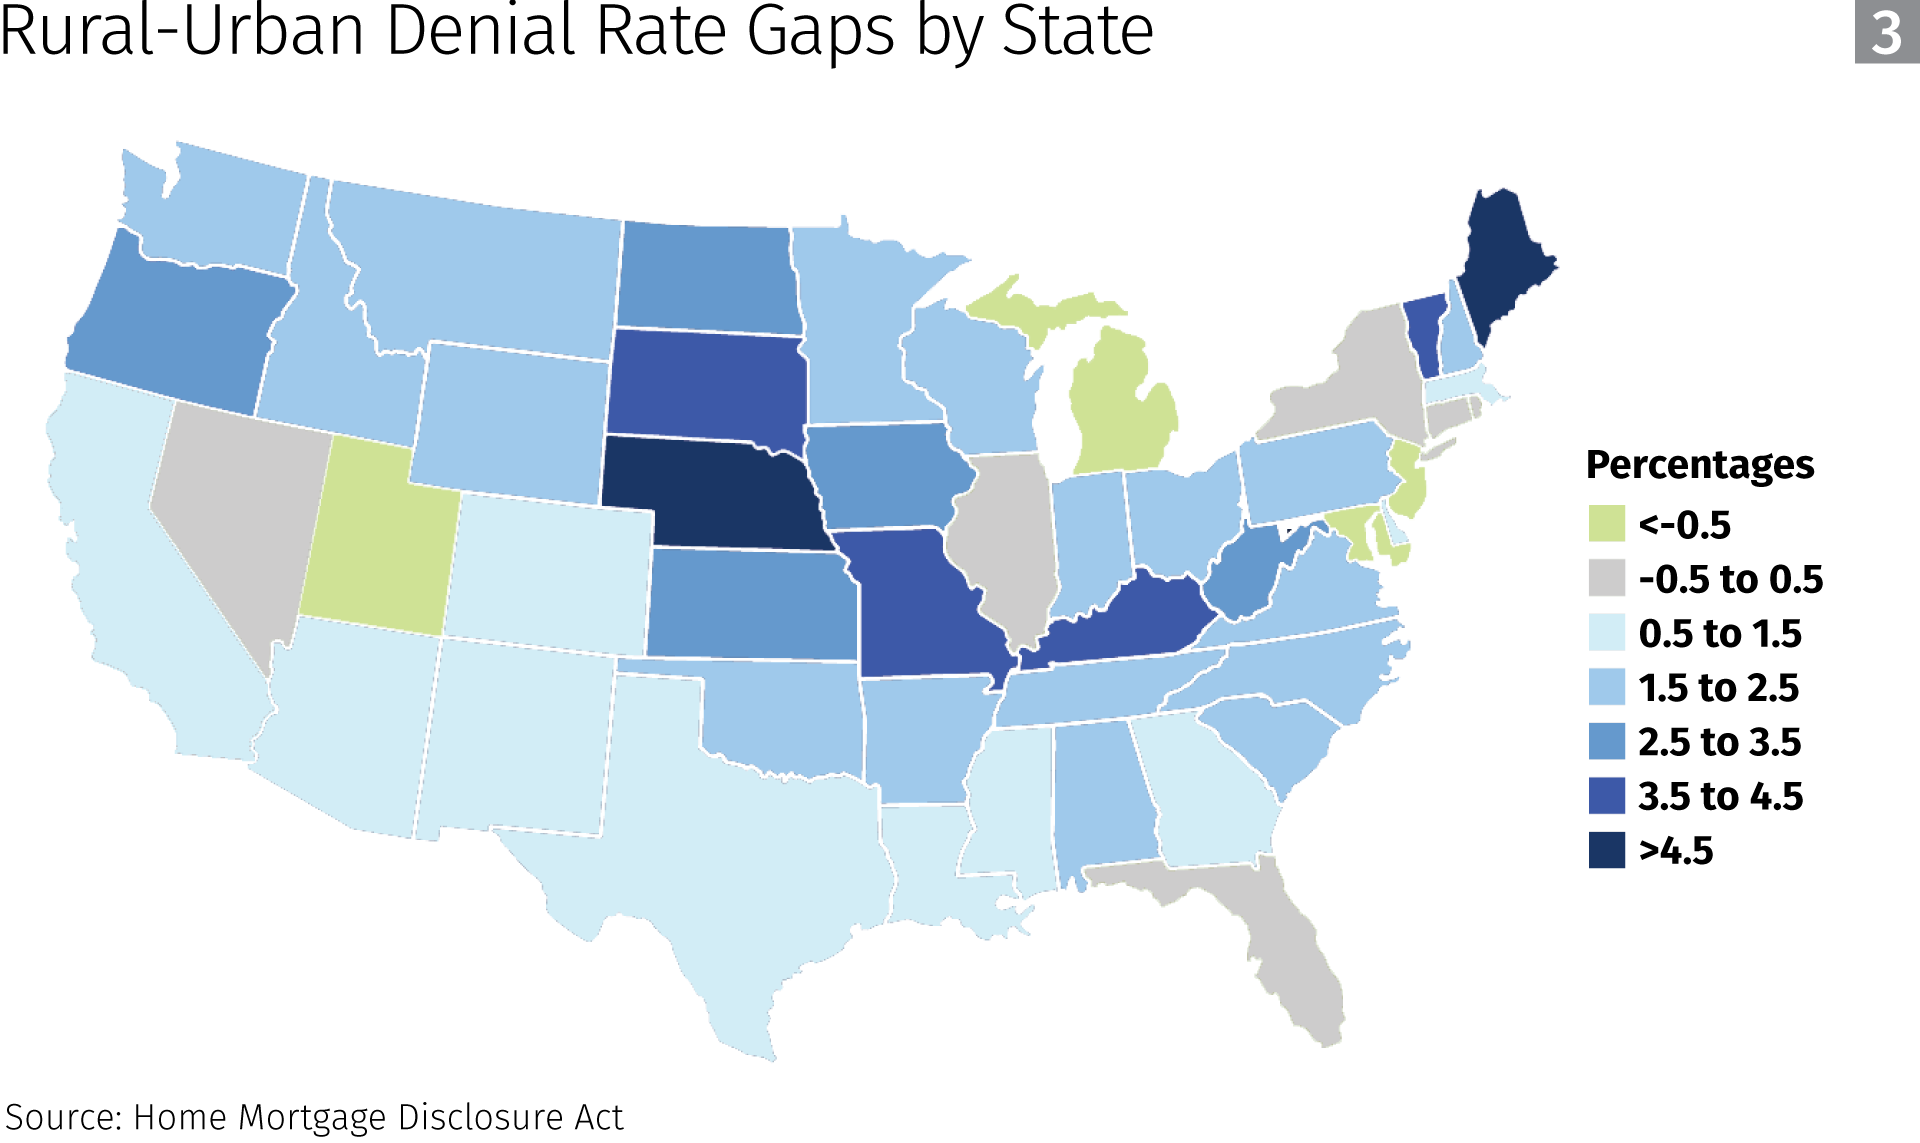 Rural urban denial rate gaps by state